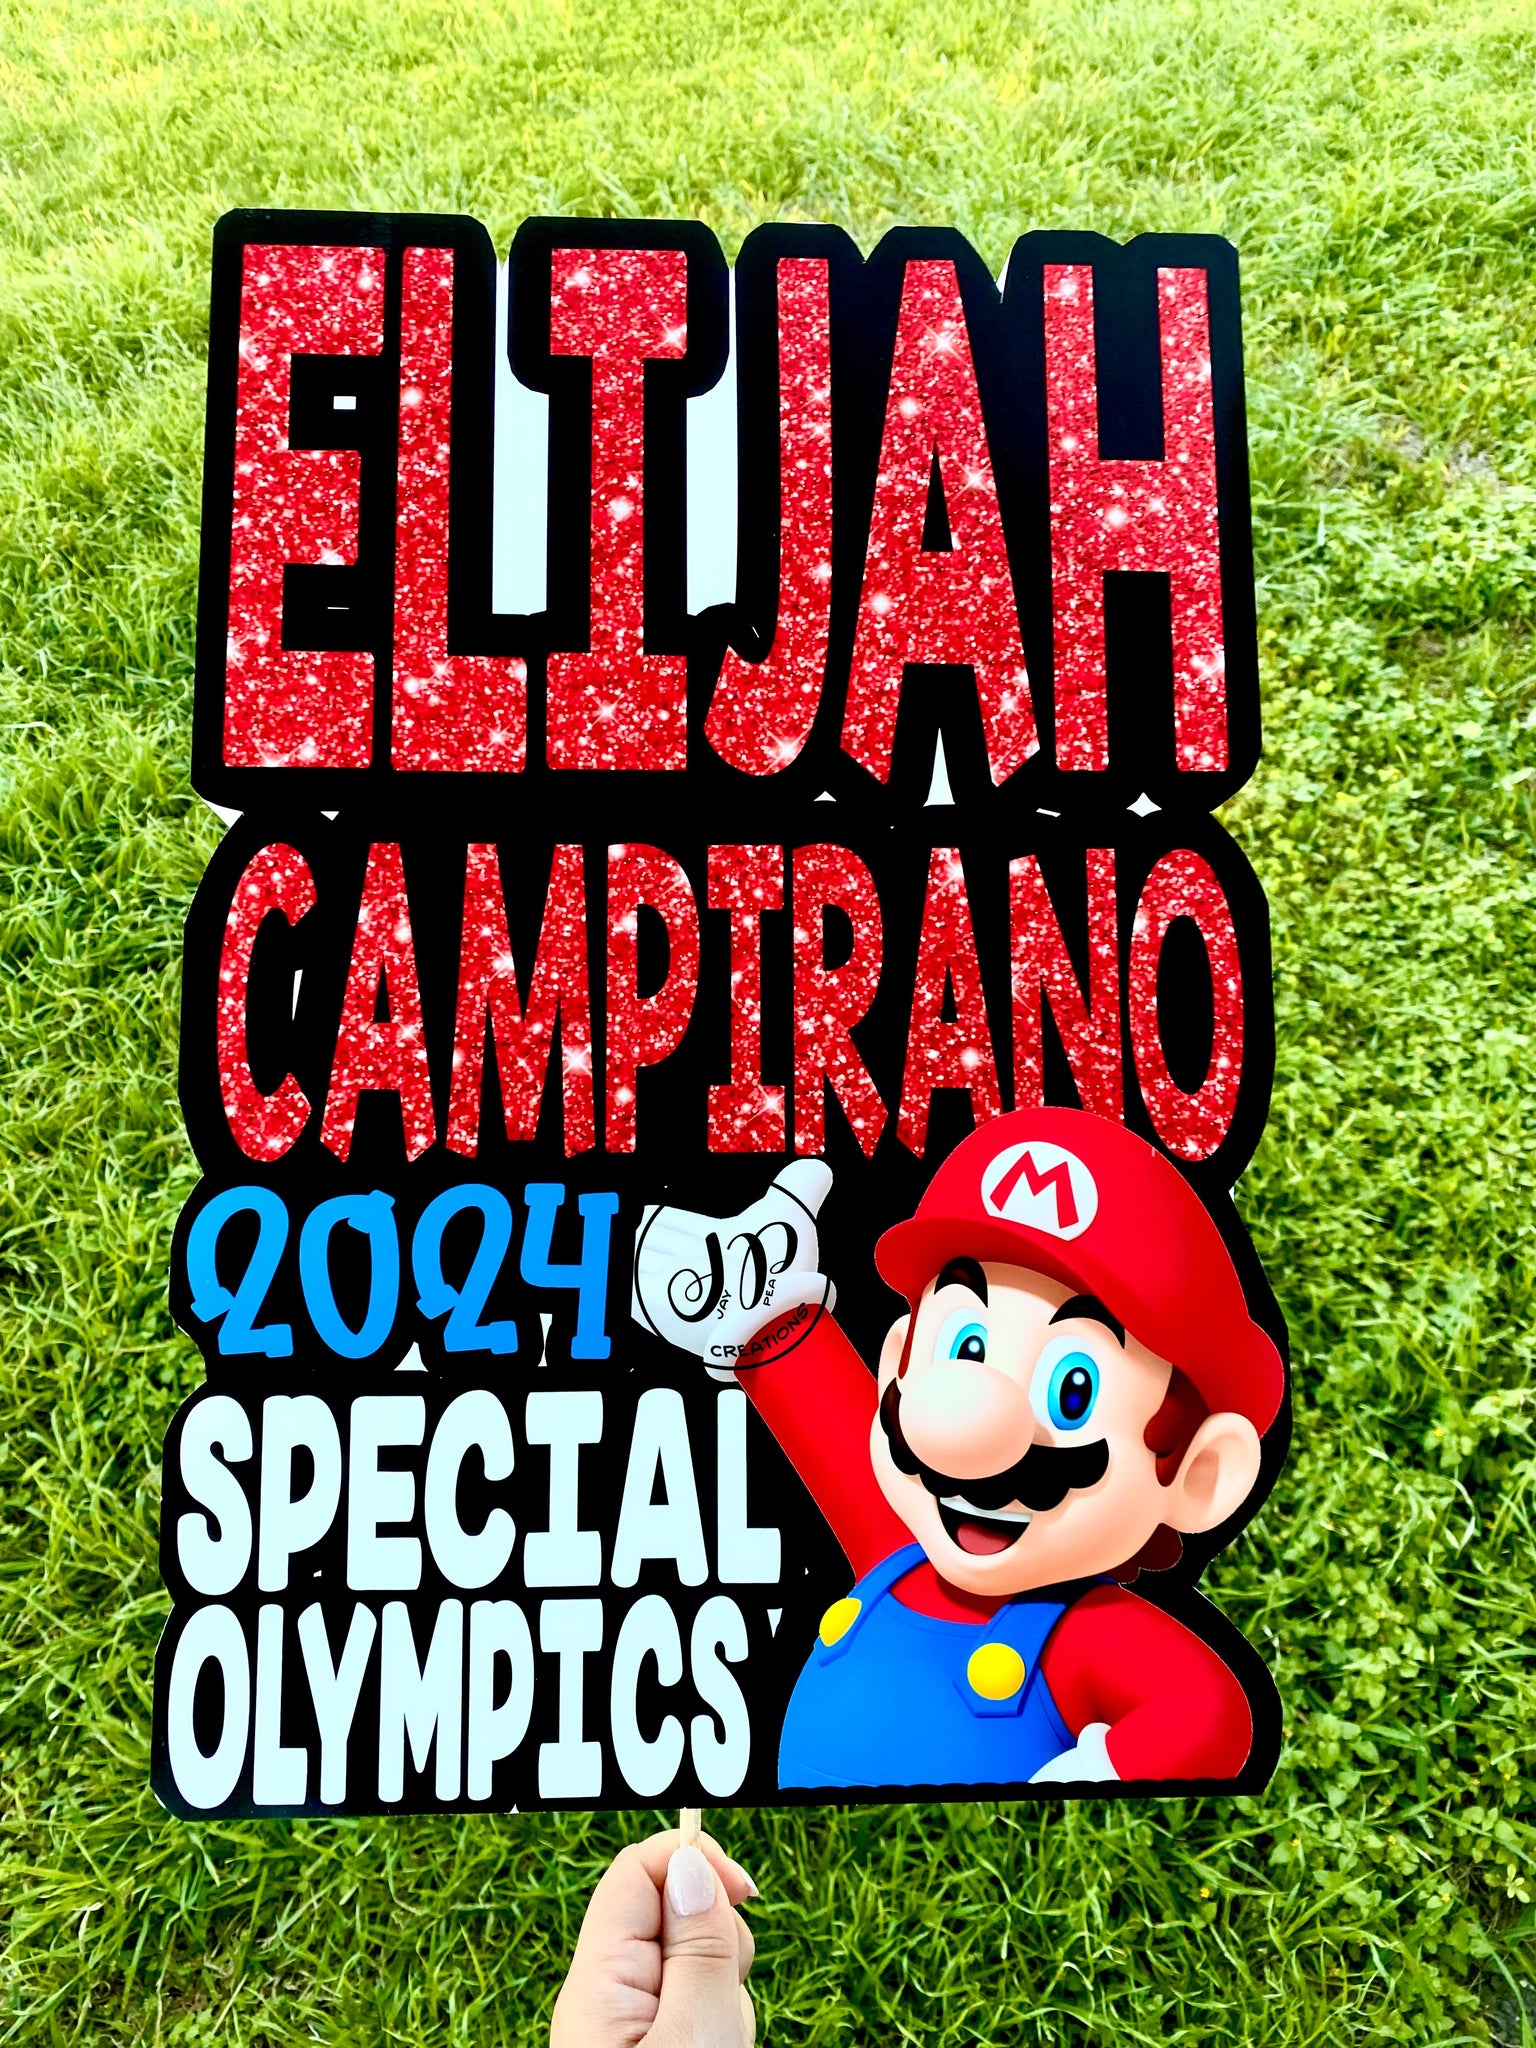 Special Olympics handheld